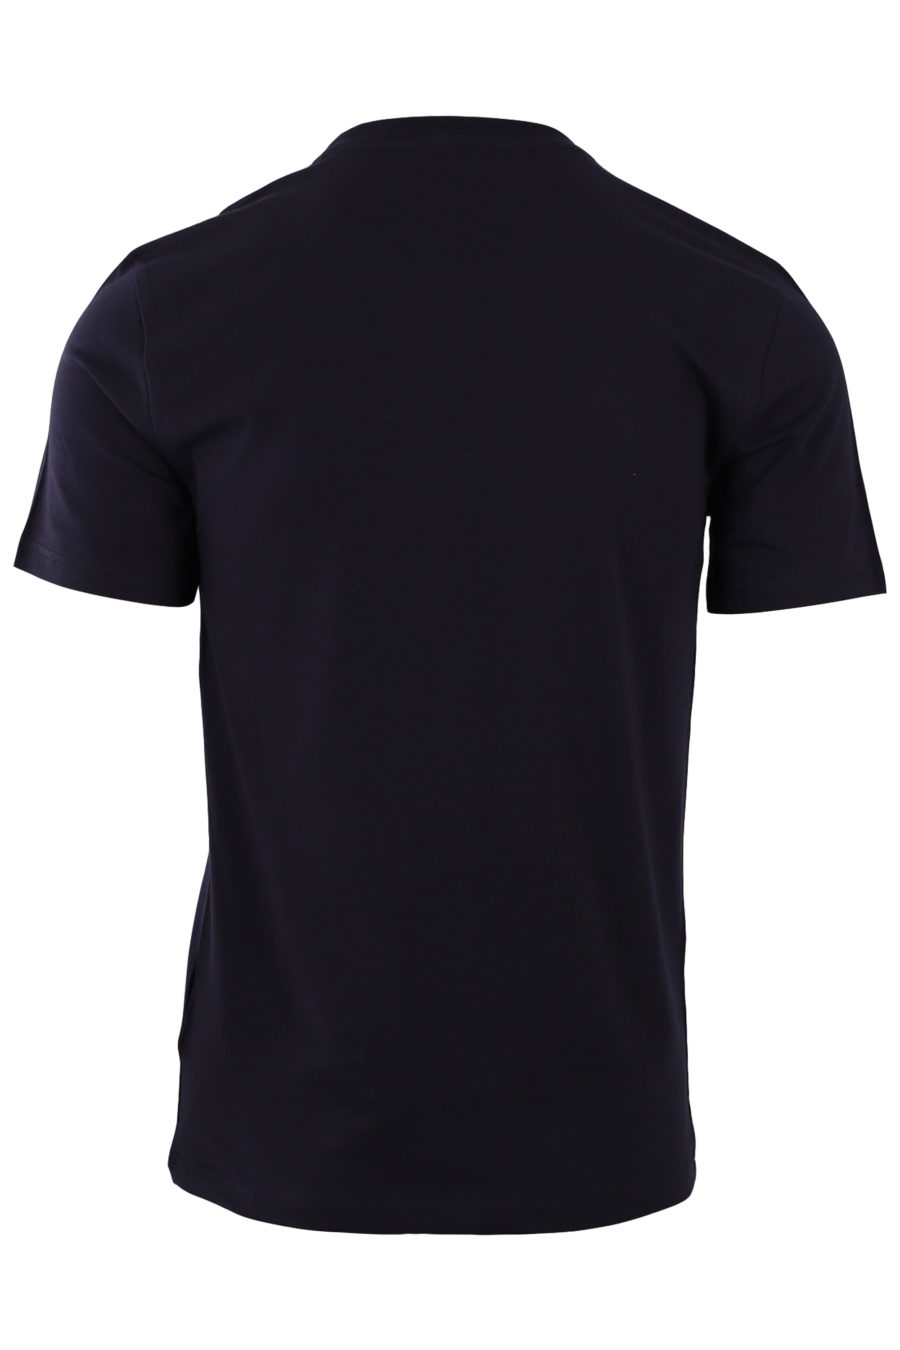 Marineblaues T-Shirt mit doppelter Logofrage - 574d966ce255bc7d1bae61d0426b7818140d2cda